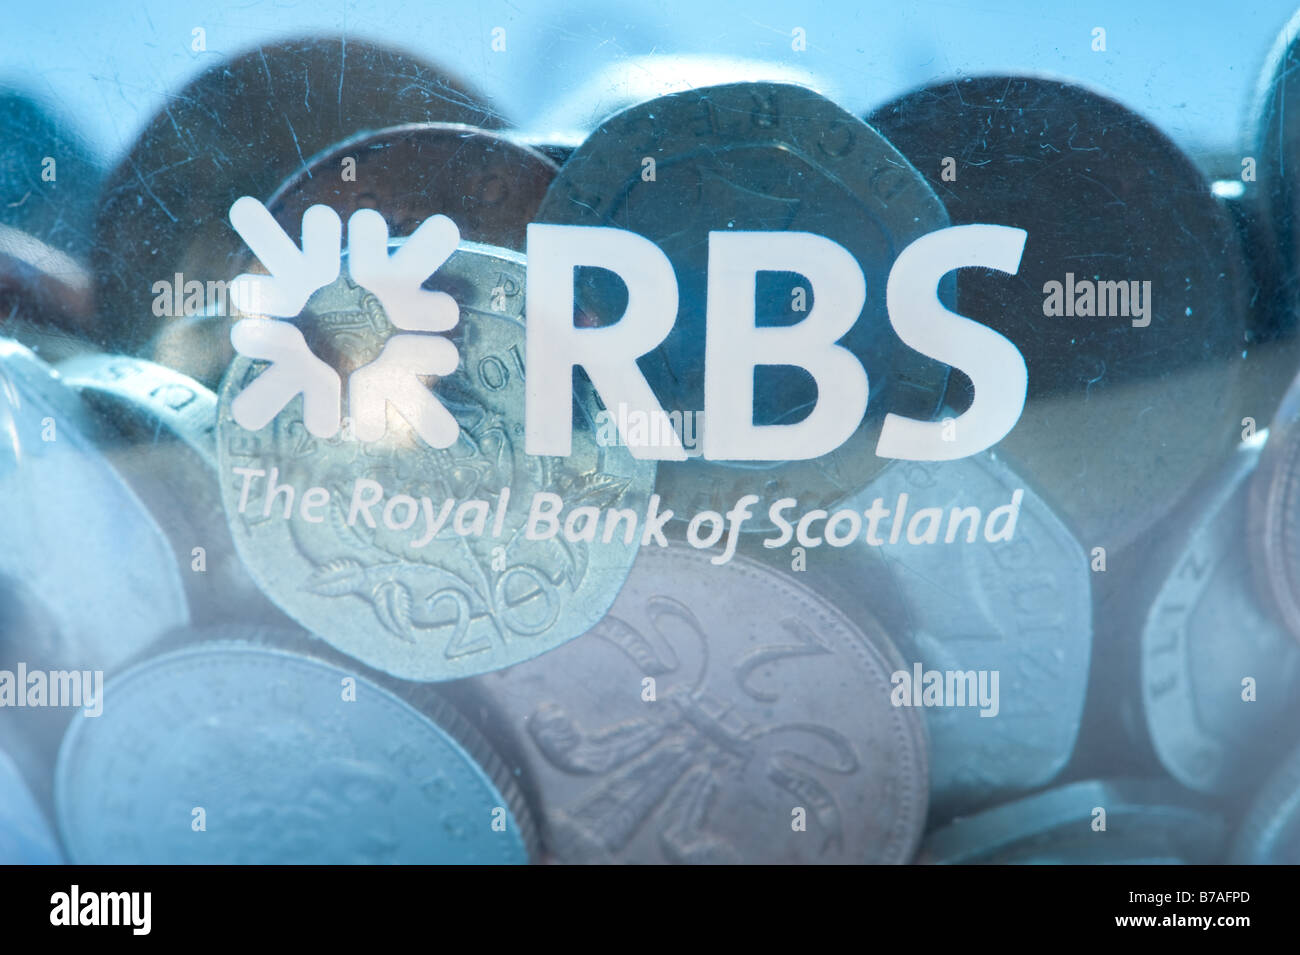 RBS Royal Bank of Scotland piggy bank full of coins saving money savings cash UK sterling currency credit crunch crisis britain Stock Photo